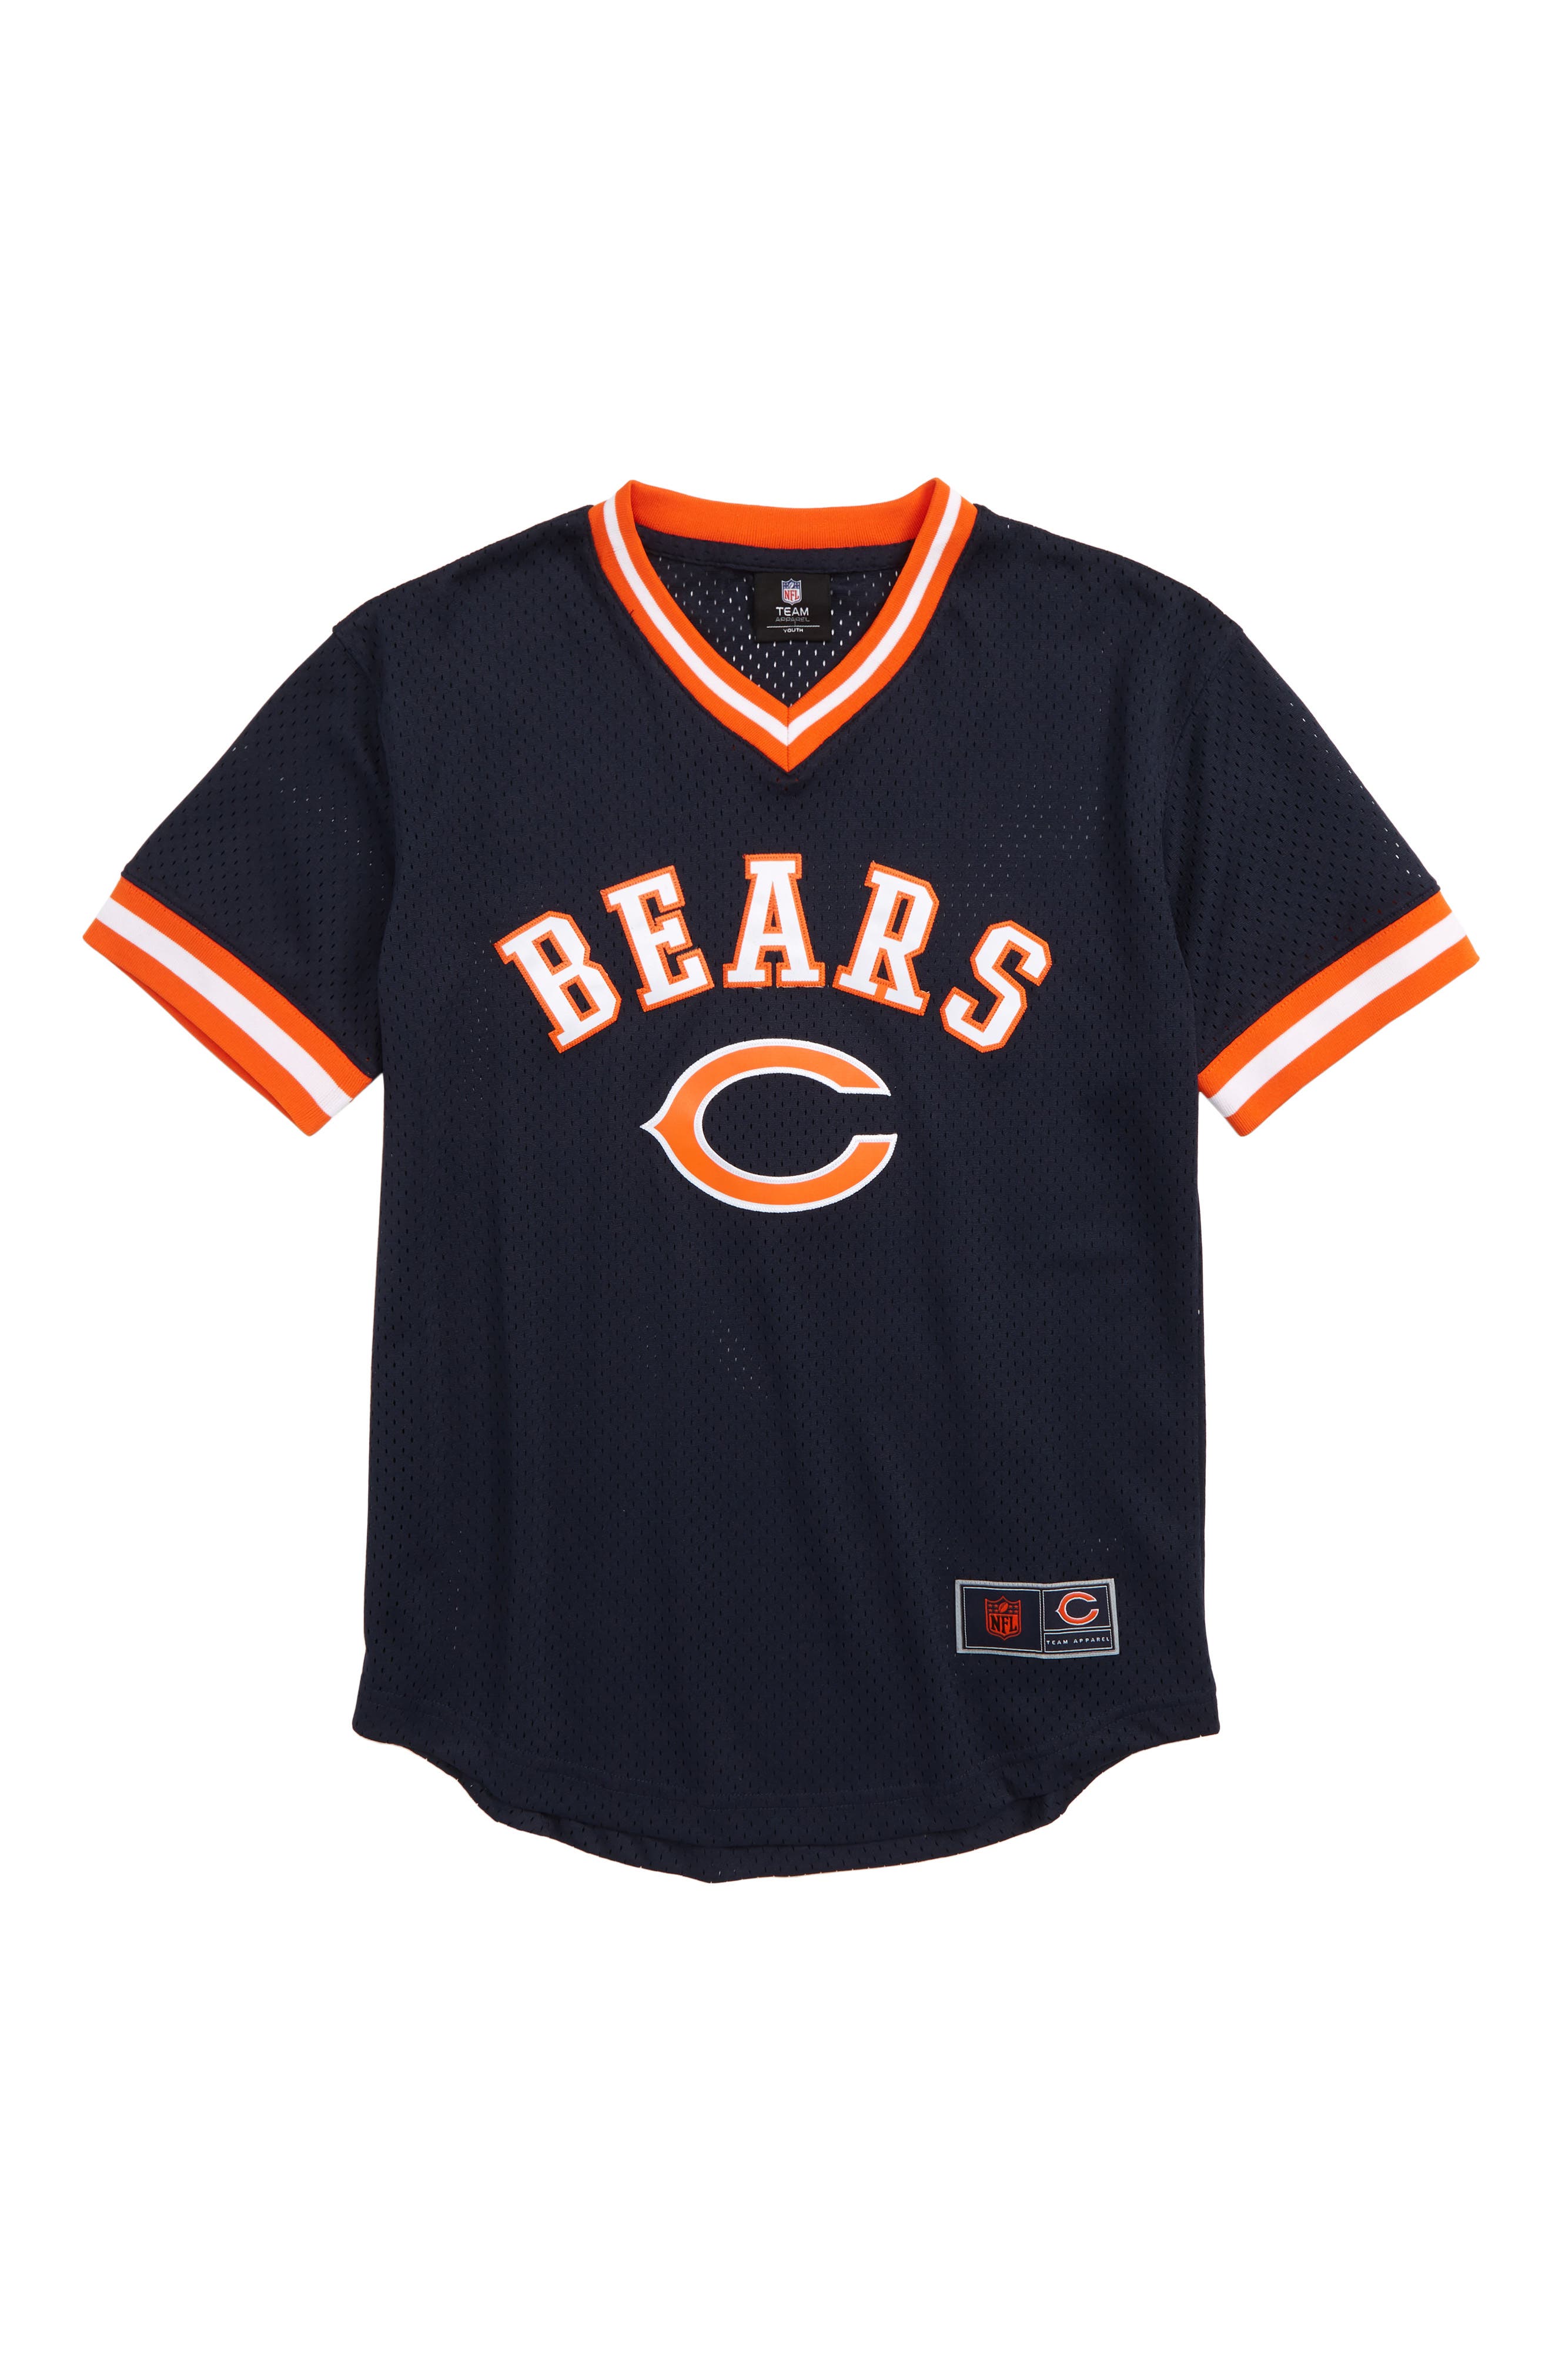 boys chicago bears jersey